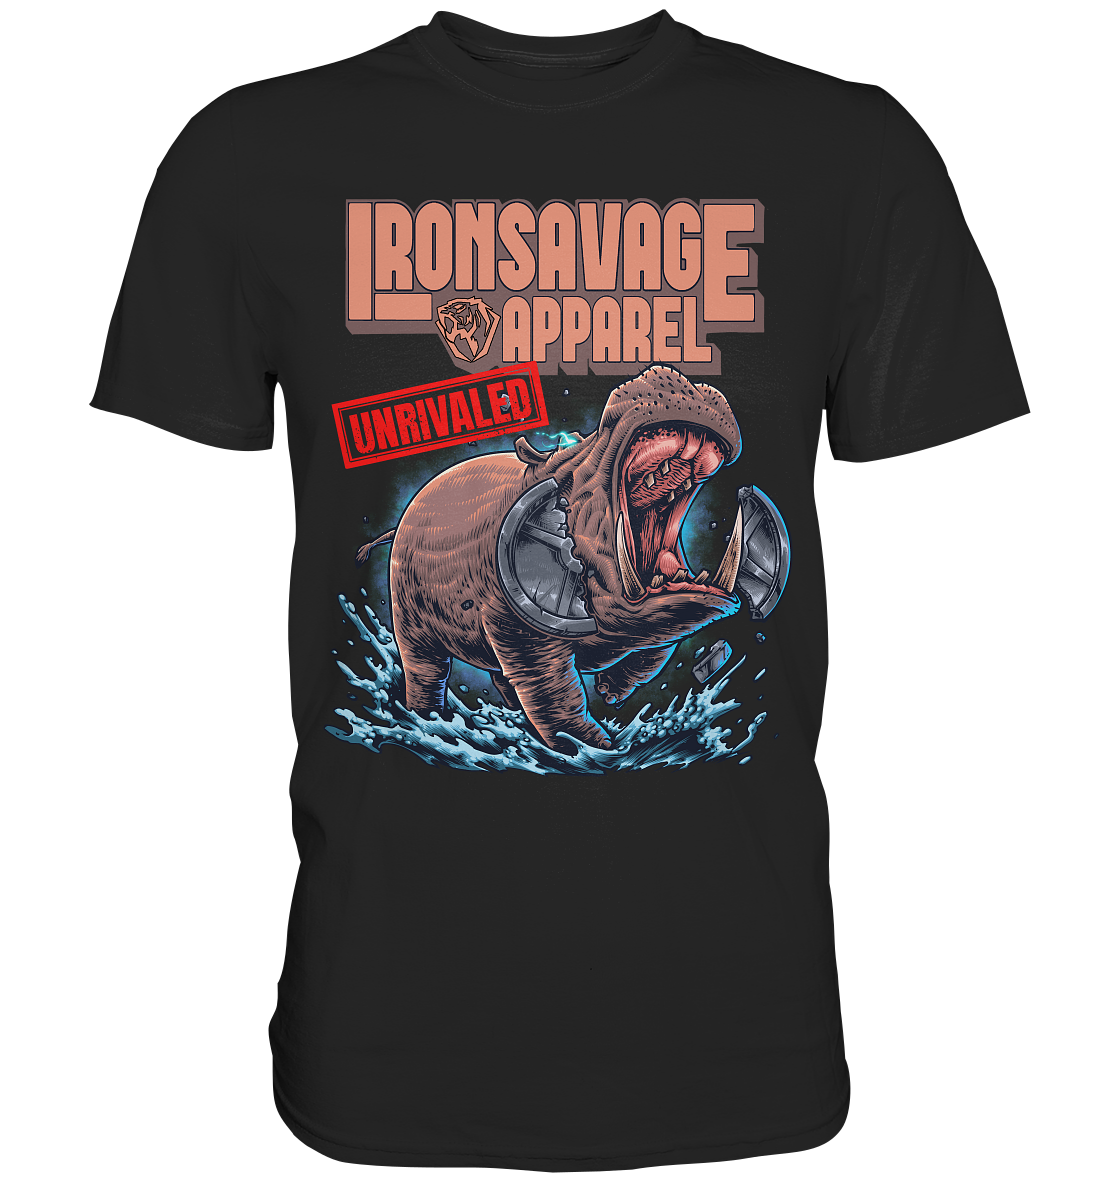 Hippo Brutal Mess T Shirt Eu Iron Savage Apparel 